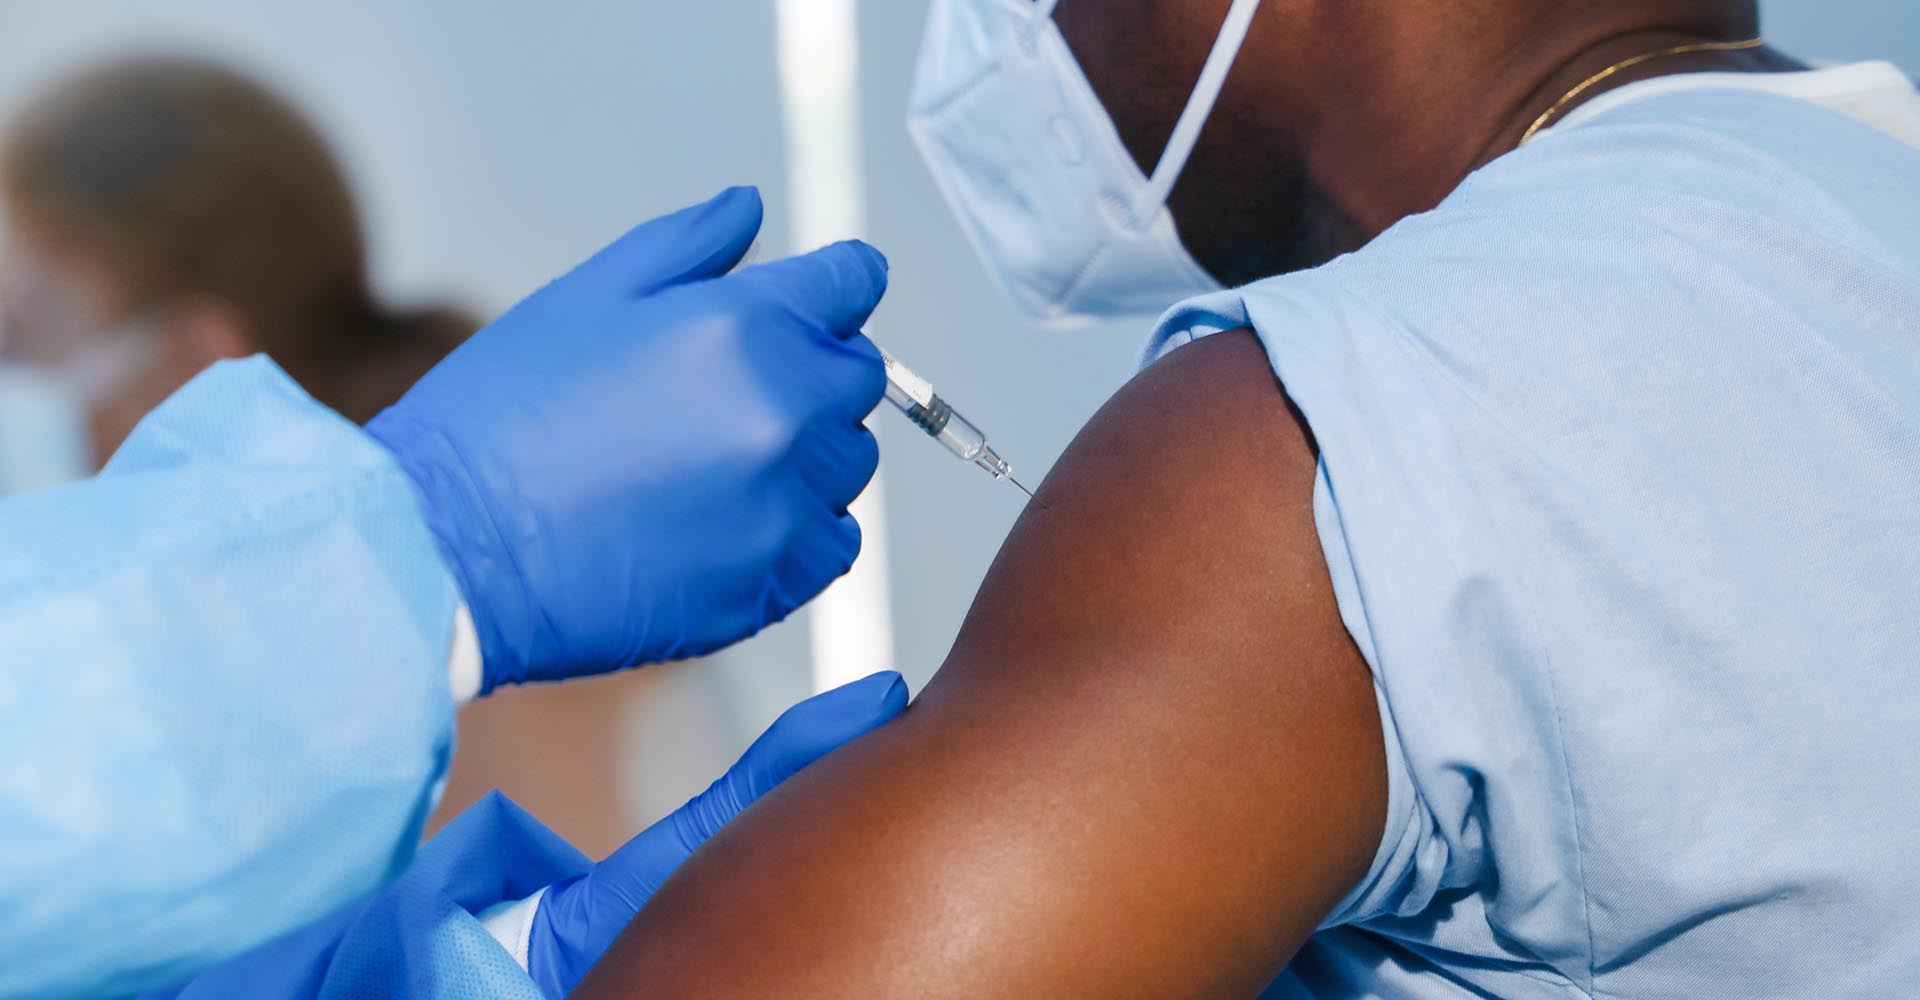 Flu or COVID-19? Get a flu shot to stem the threat of ‘twindemic’ public-health crises